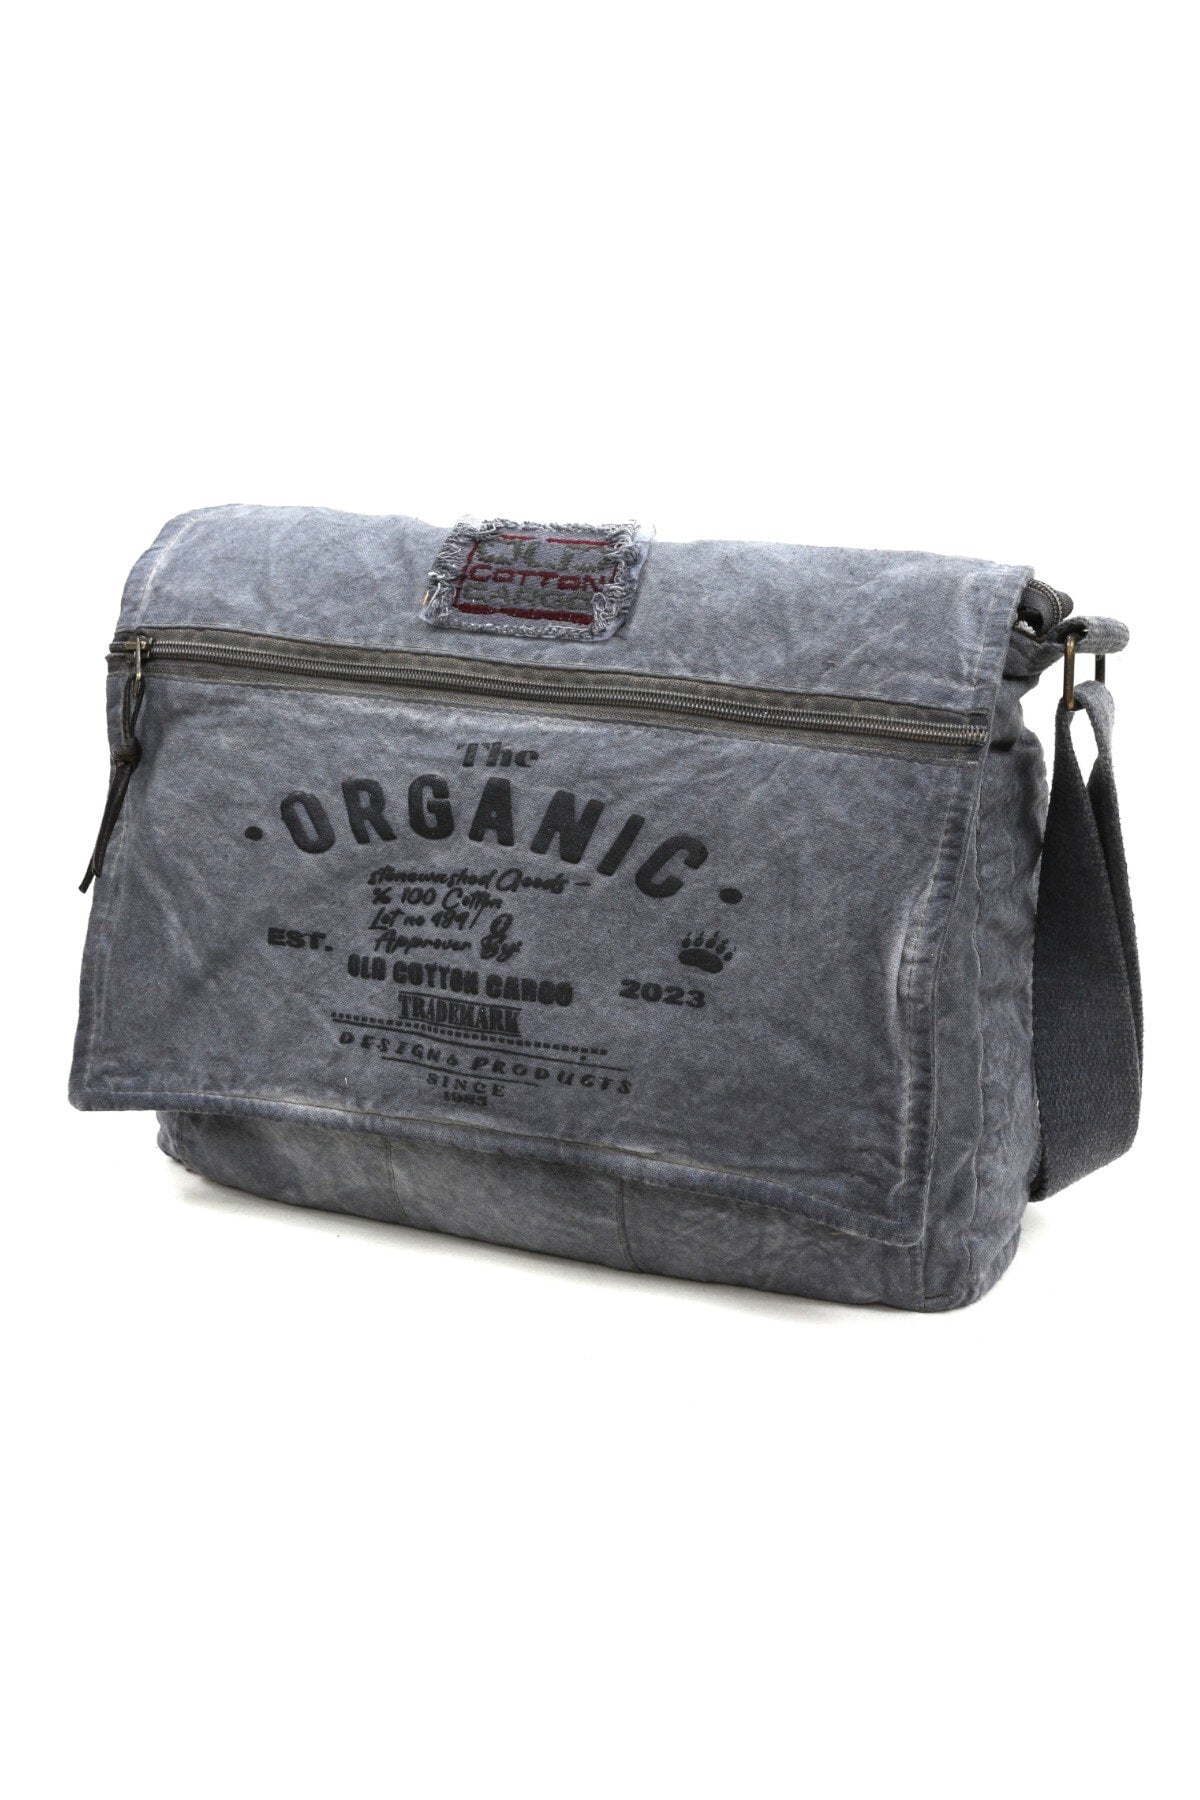 Shabby Canvas Shoulder Messenger Gray Laptop School Travel Daily Vintage Cotton Fabric Bag